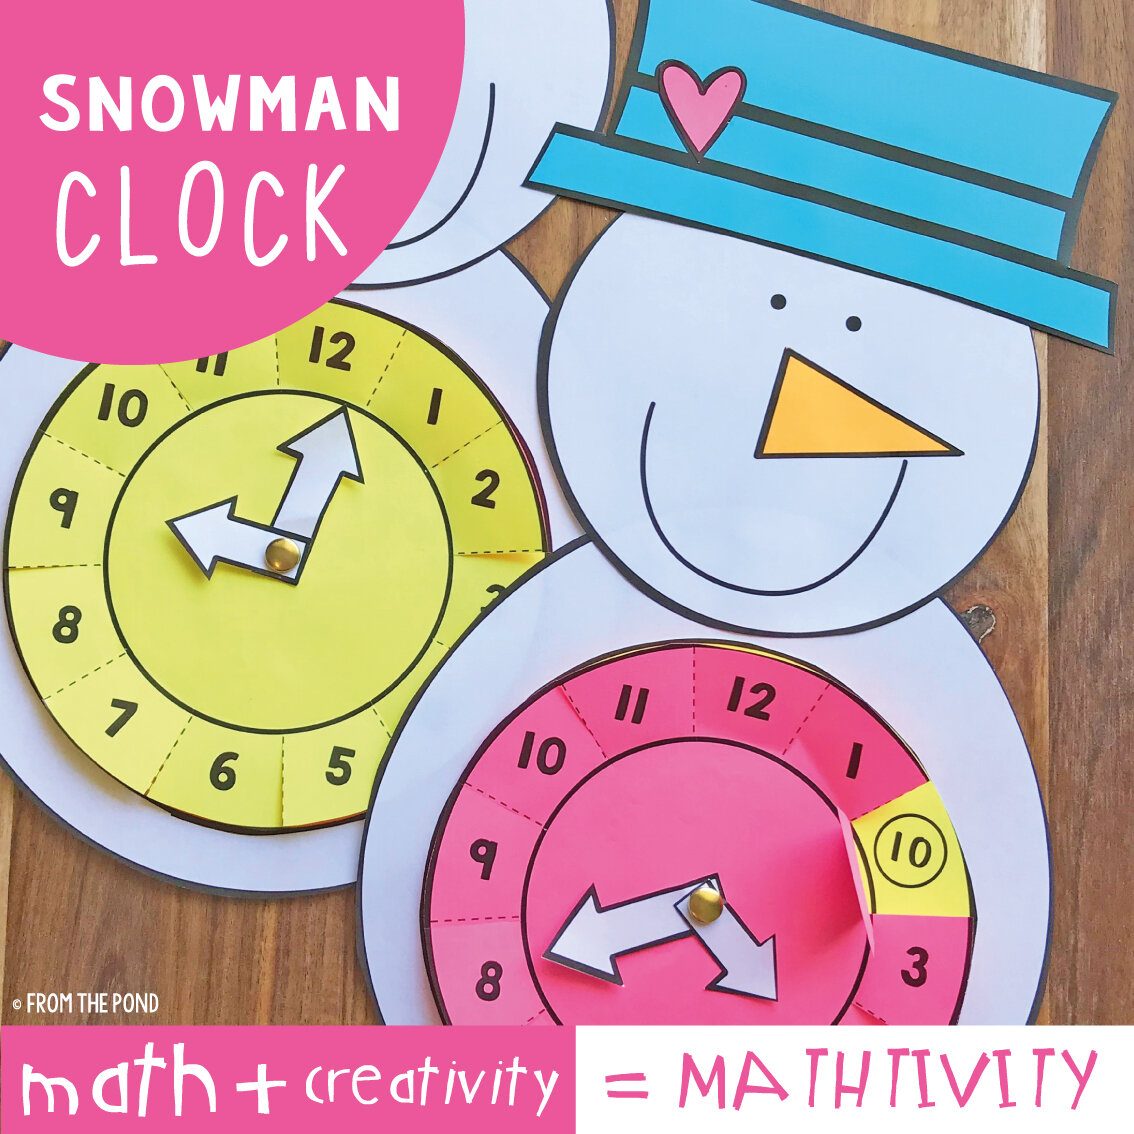 snowman-clock-mathtivity-pic-01.jpg